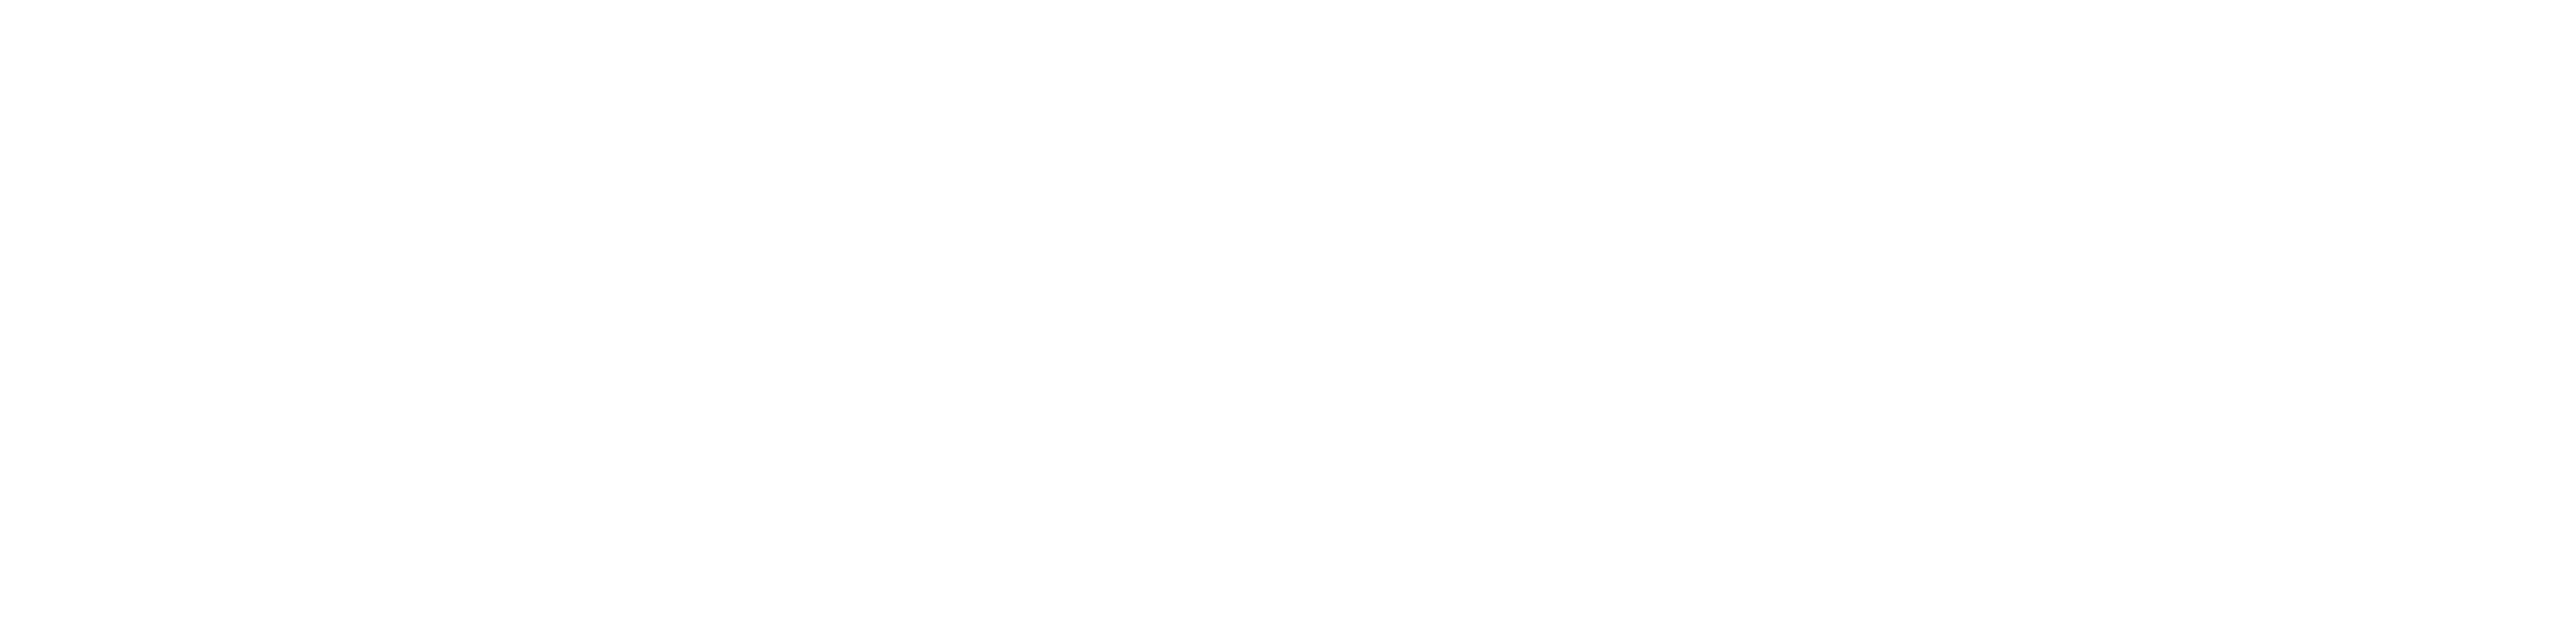 NC Local News Workshop logo white